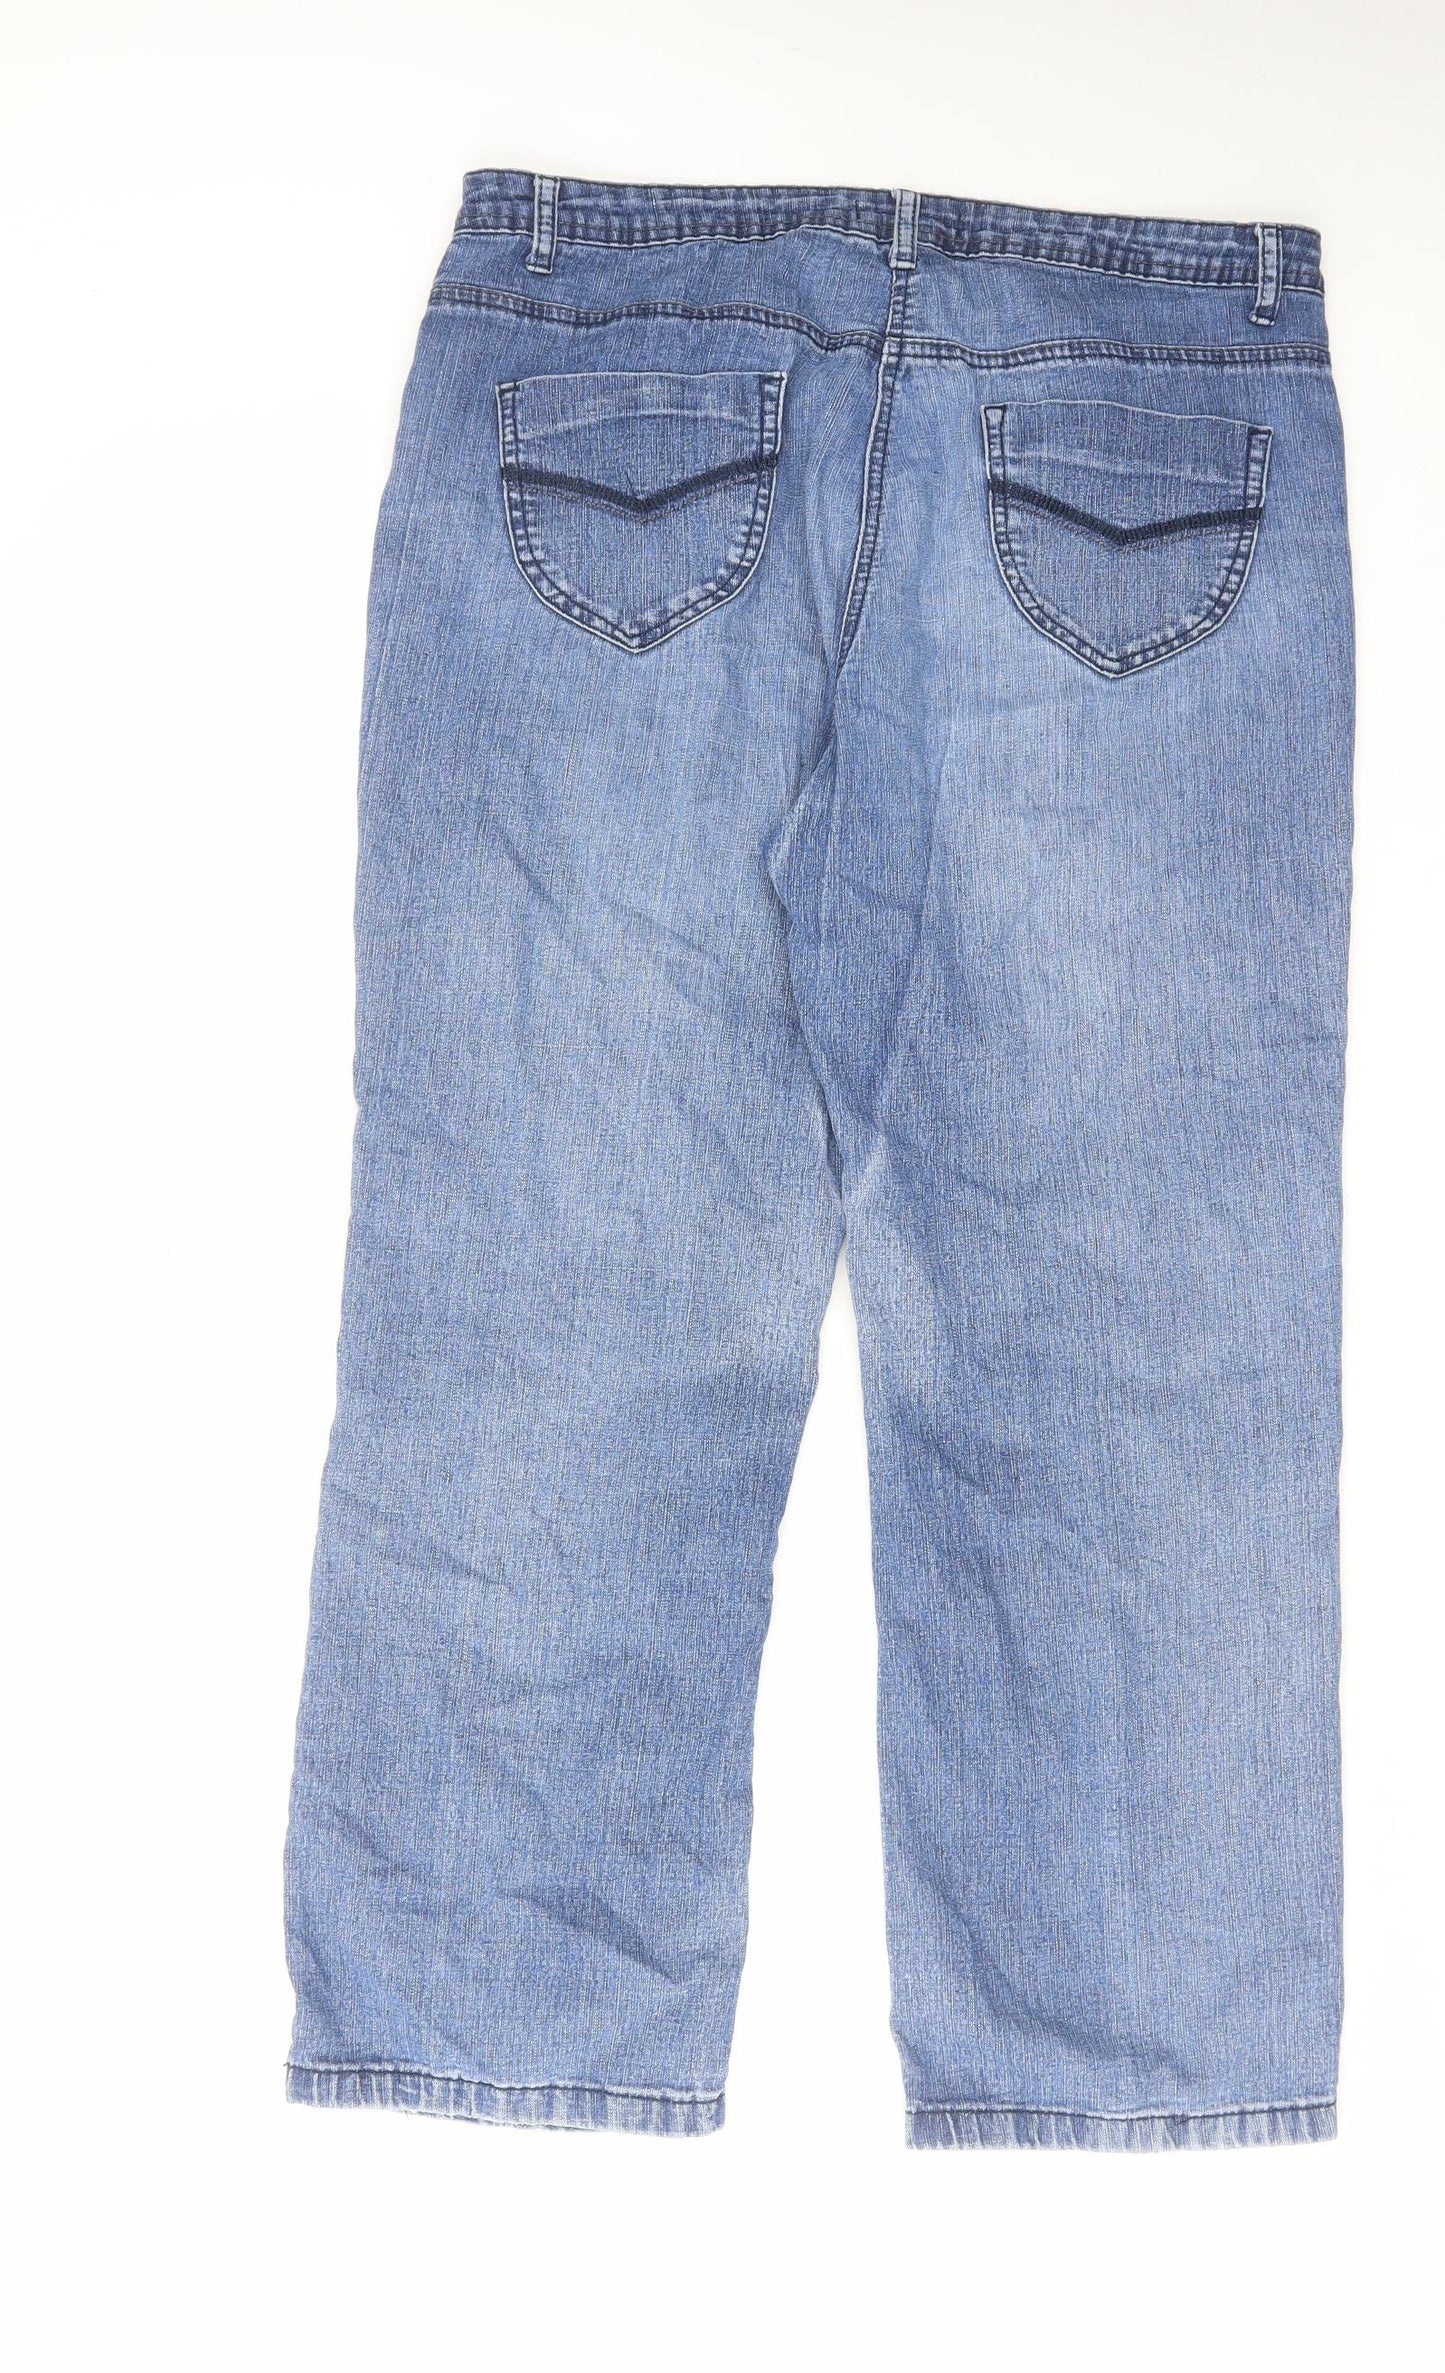 Bonmarché Womens Blue Cotton Straight Jeans Size 14 L27 in Regular Zip